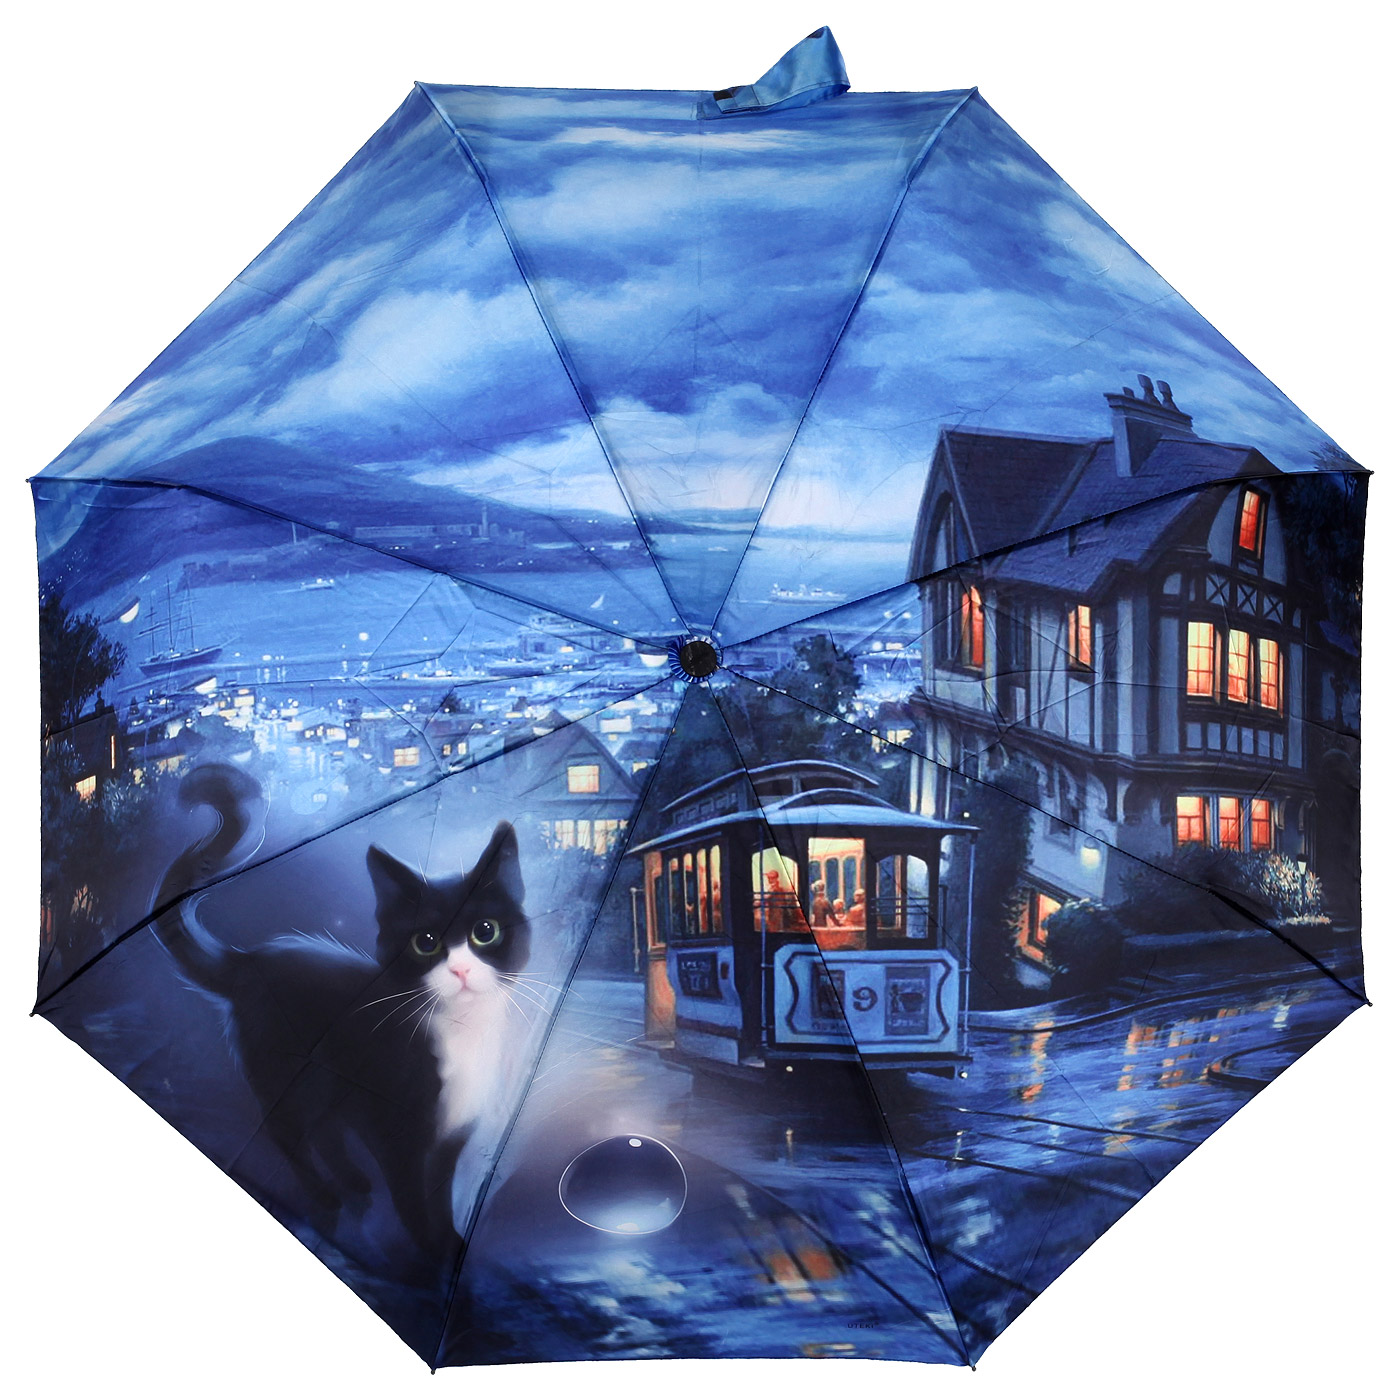 Зонт с чехлом Uteki 